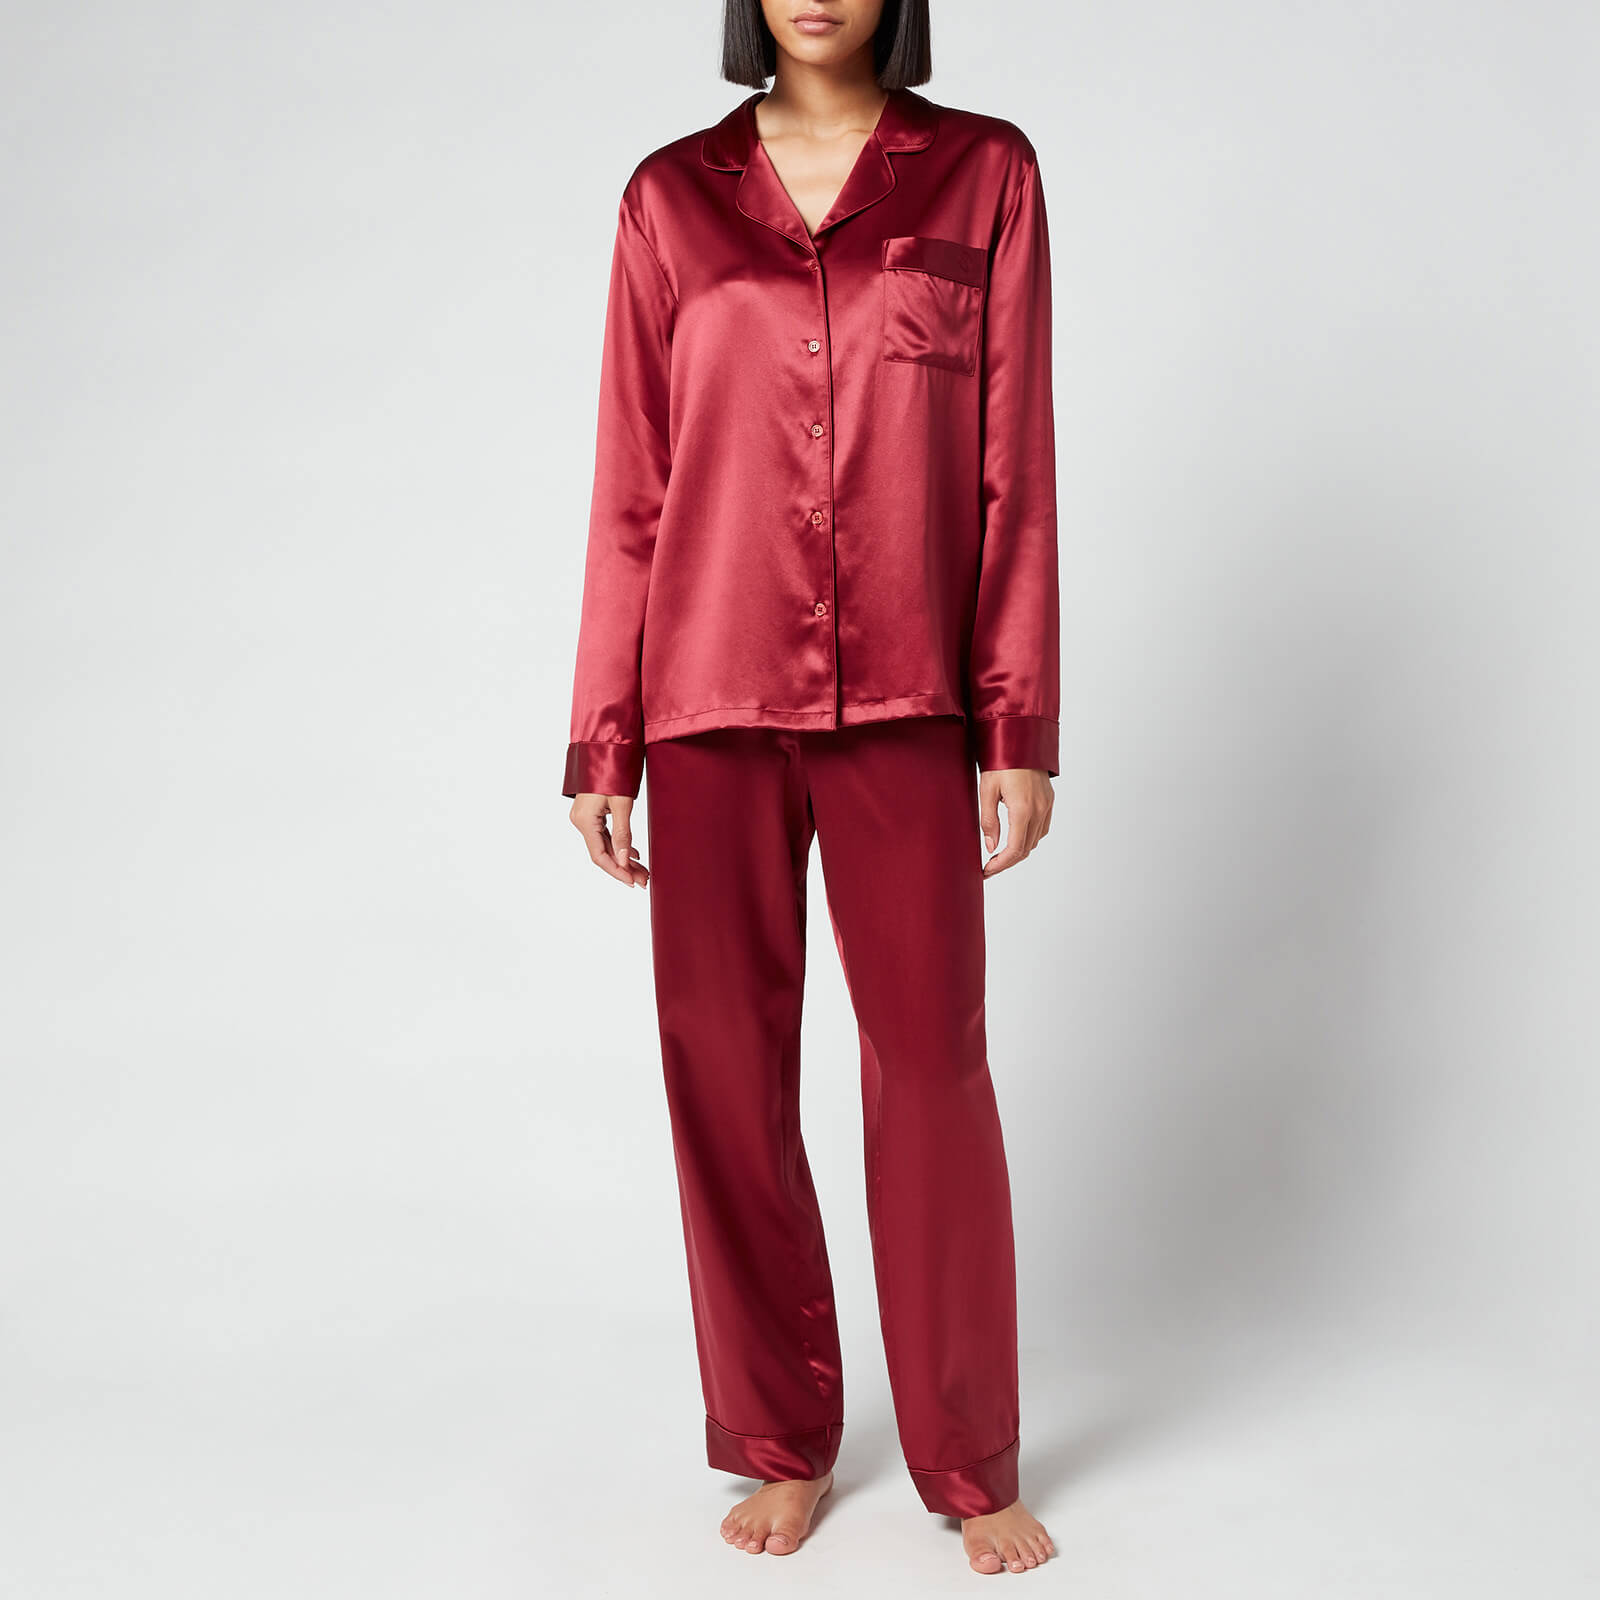 ESPA Silk Pyjamas - Claret Rose - S